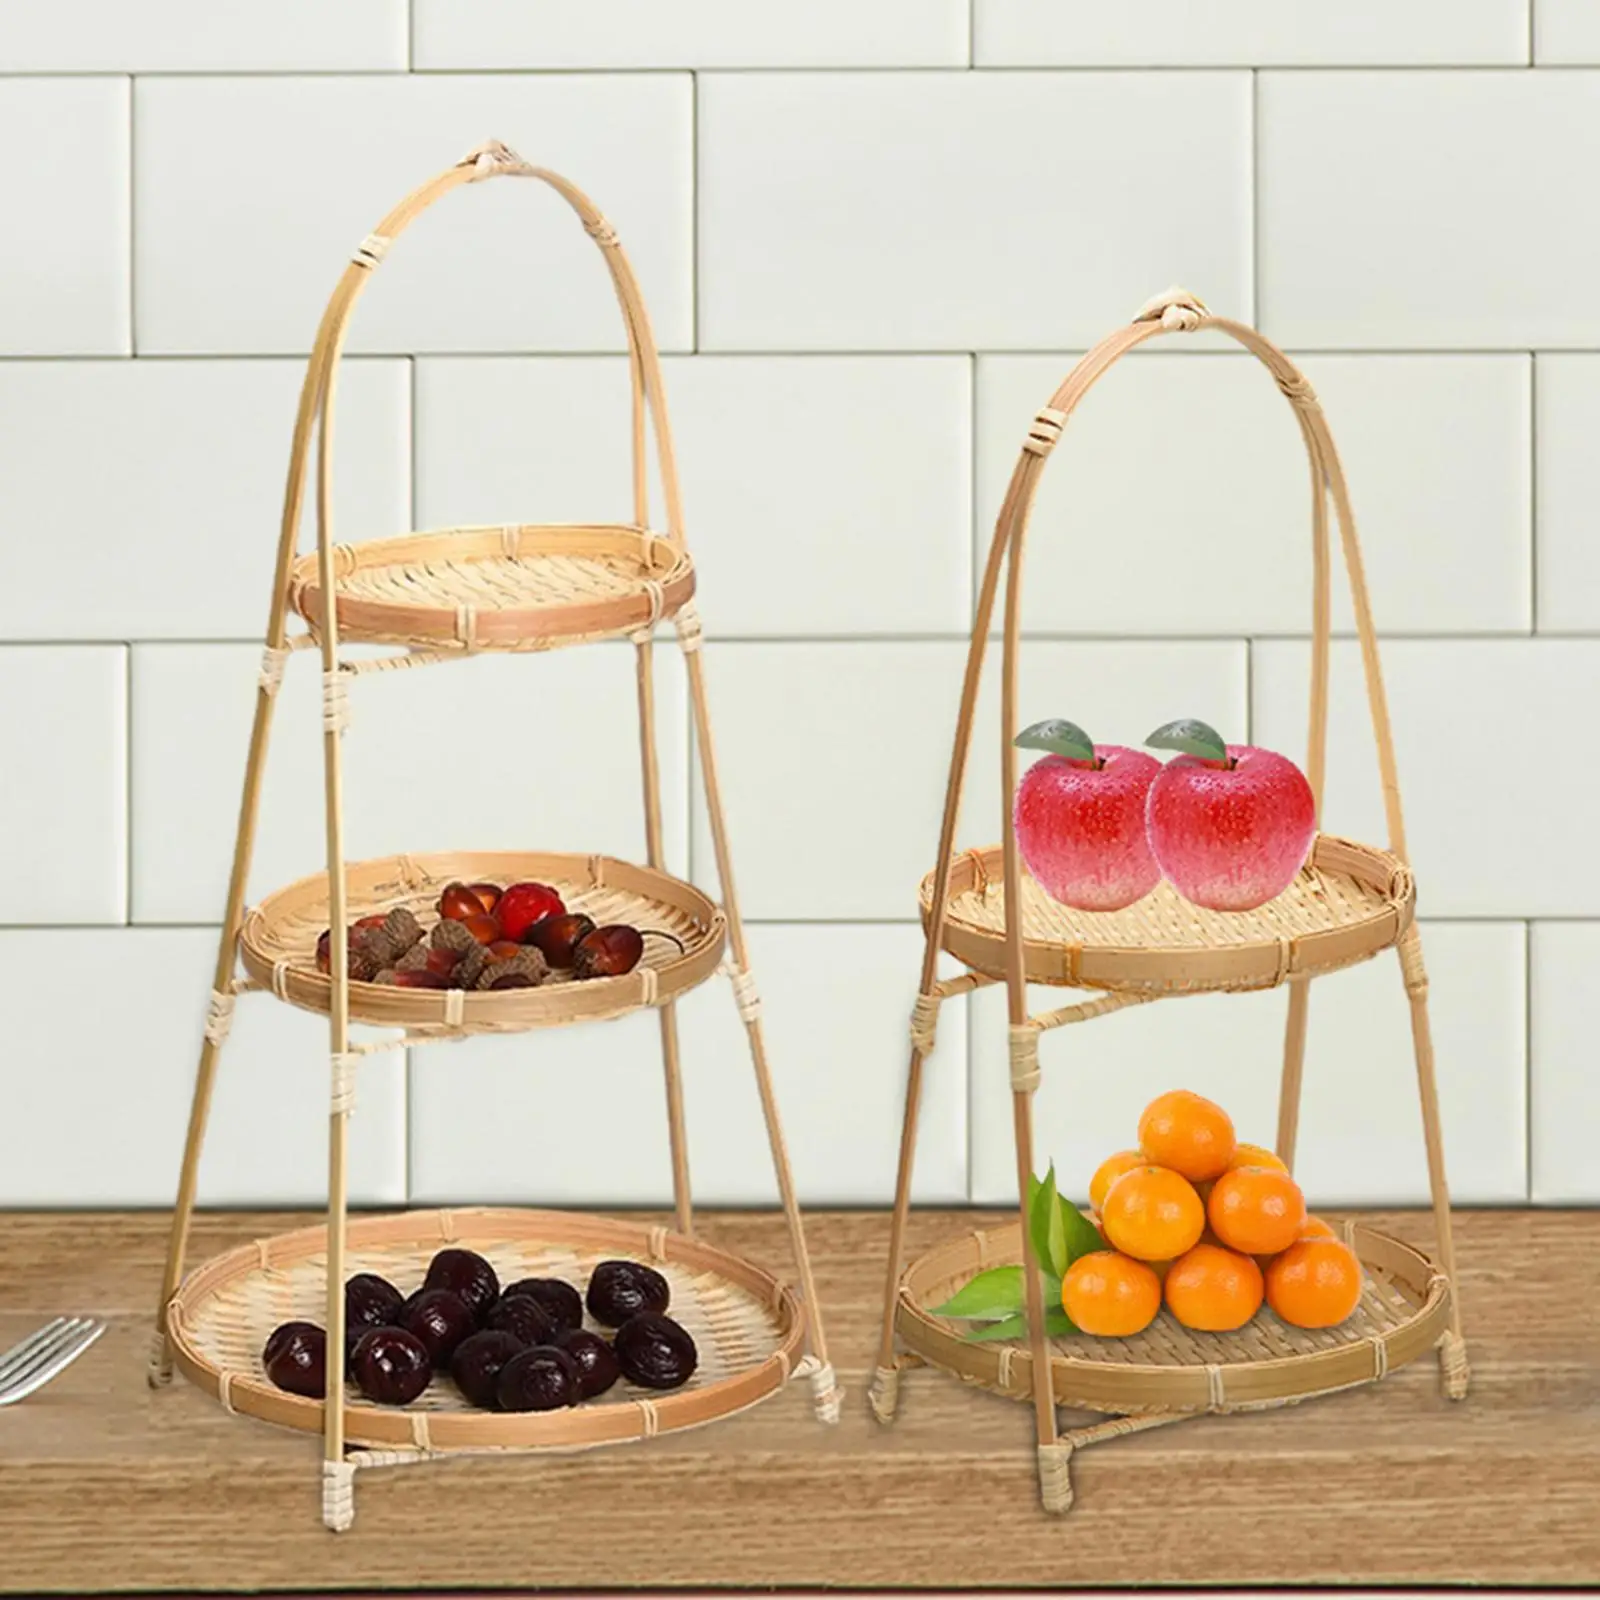 Serving Trays Vegetable Storage Stand Breakfast Basket Woven Fruit Basket Fruit Basket for Kitchen Table Party Picnics